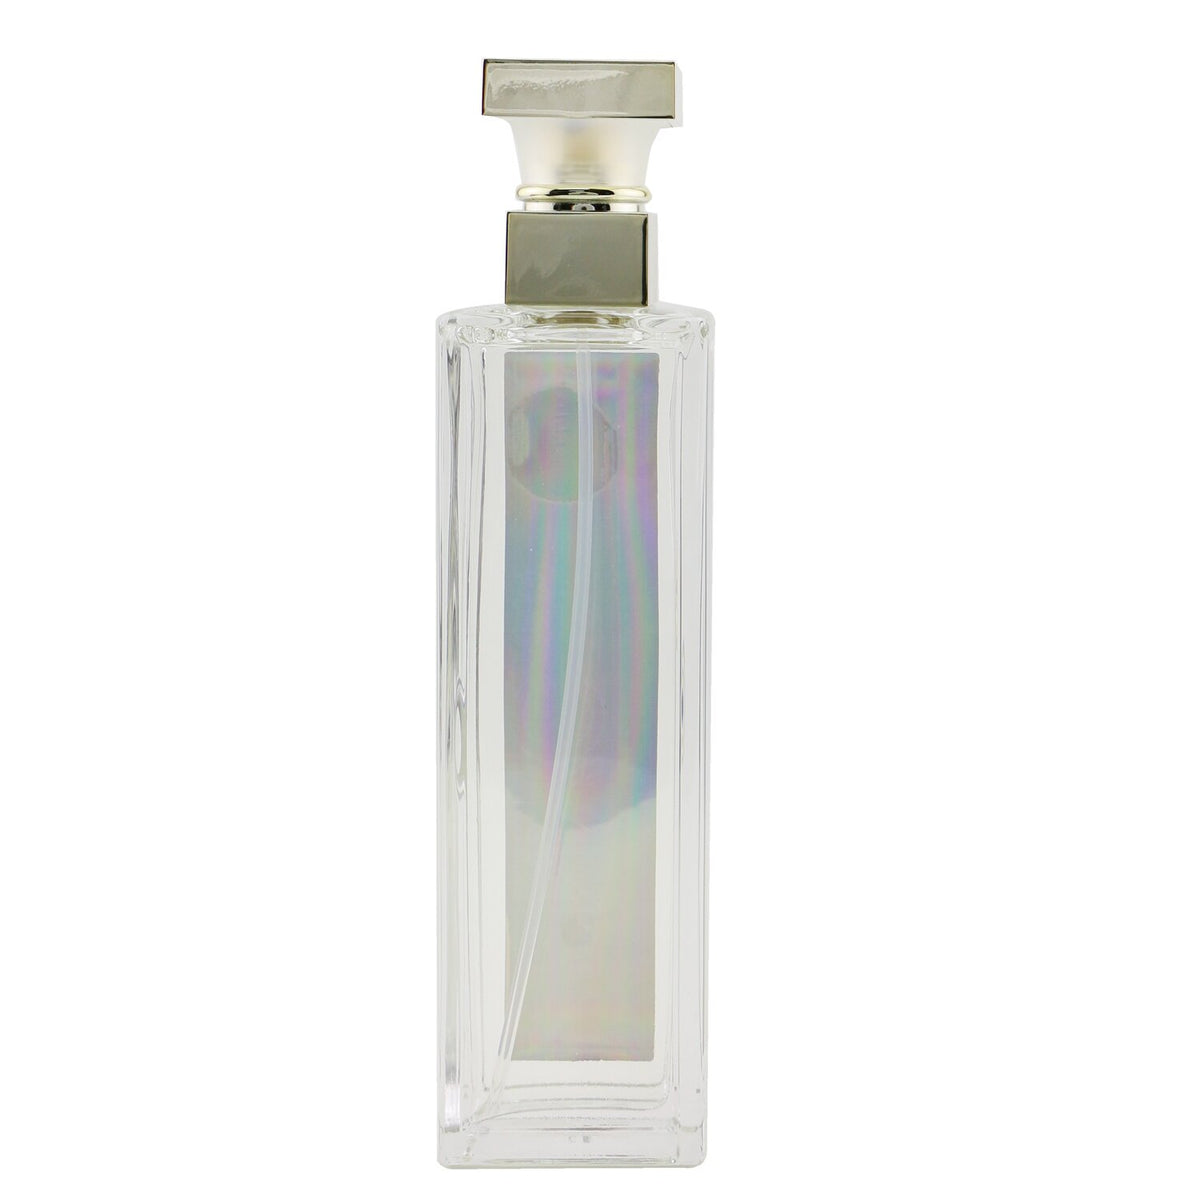 5th Avenue NYC Red Eau Parfum Spray for Sale | Elizabeth Arden, Fragrance, Buy Now – Author